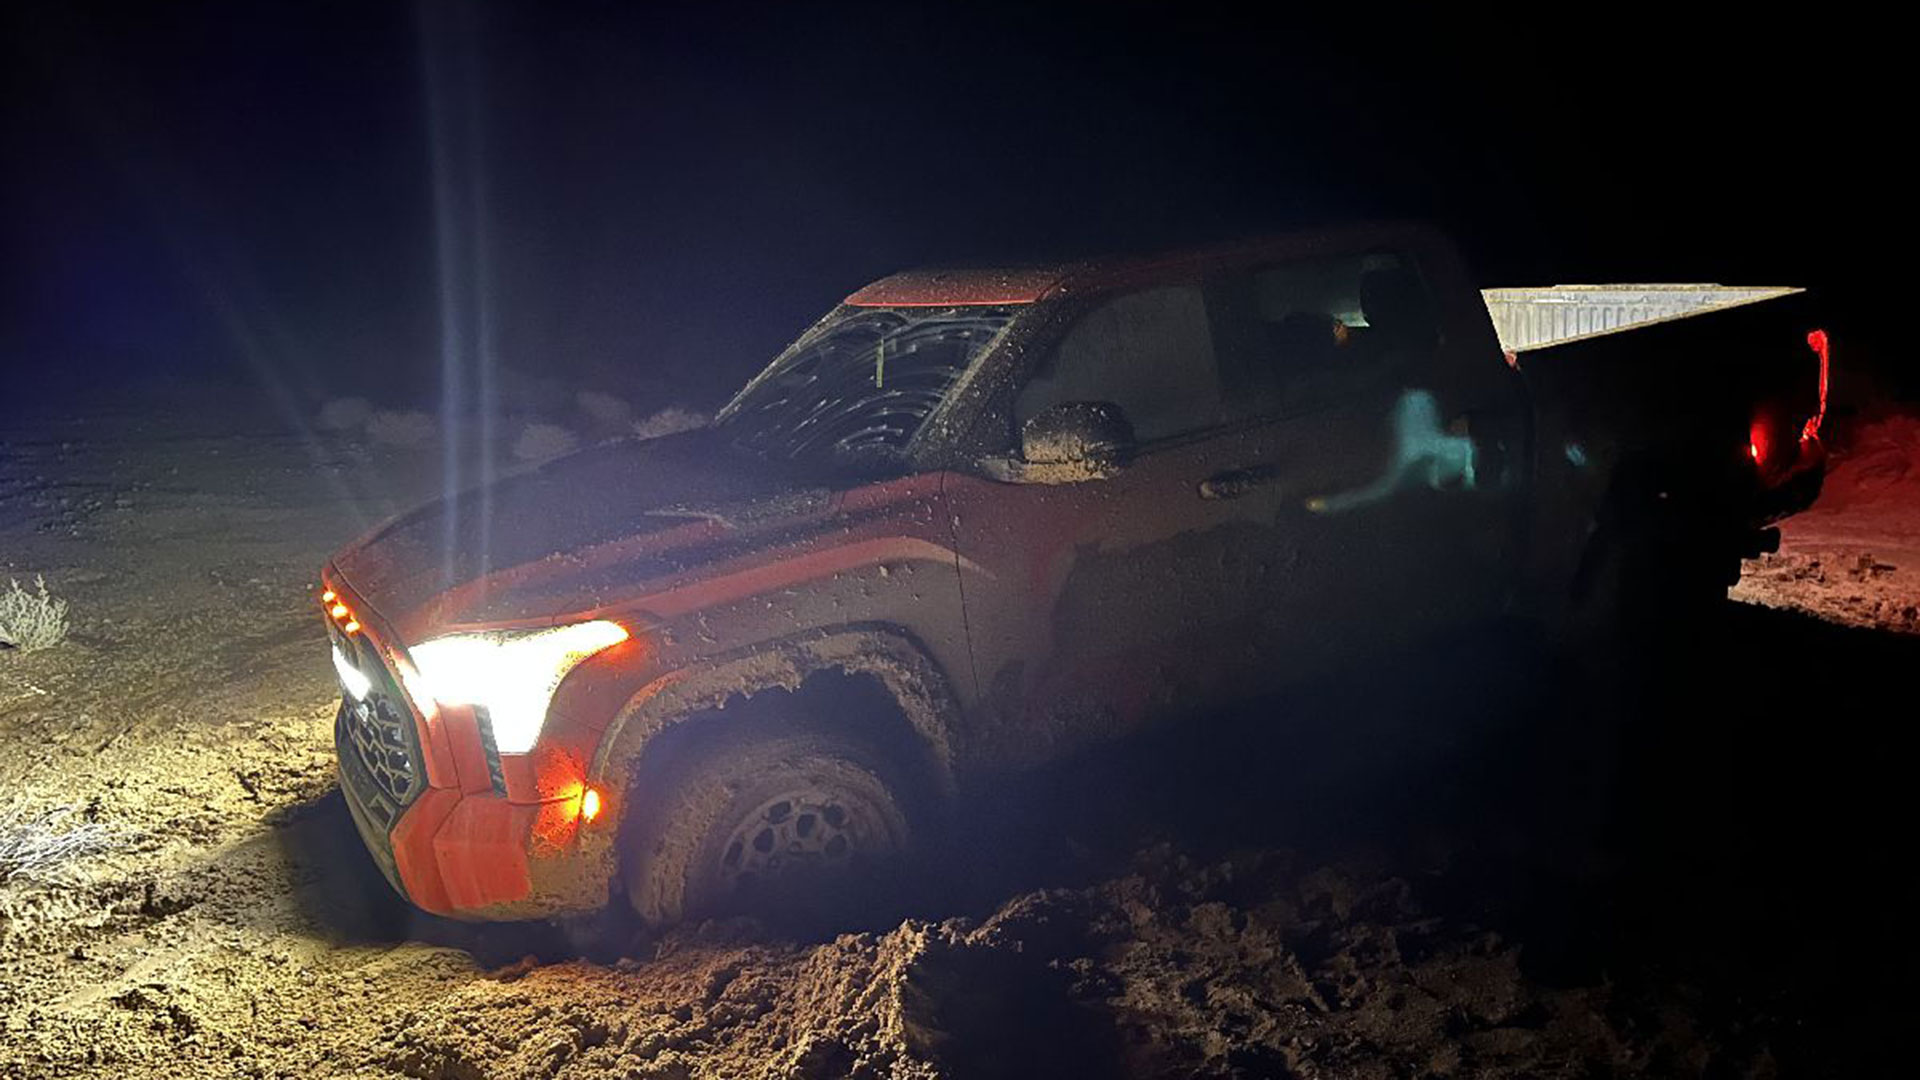 Stuck in mud in California